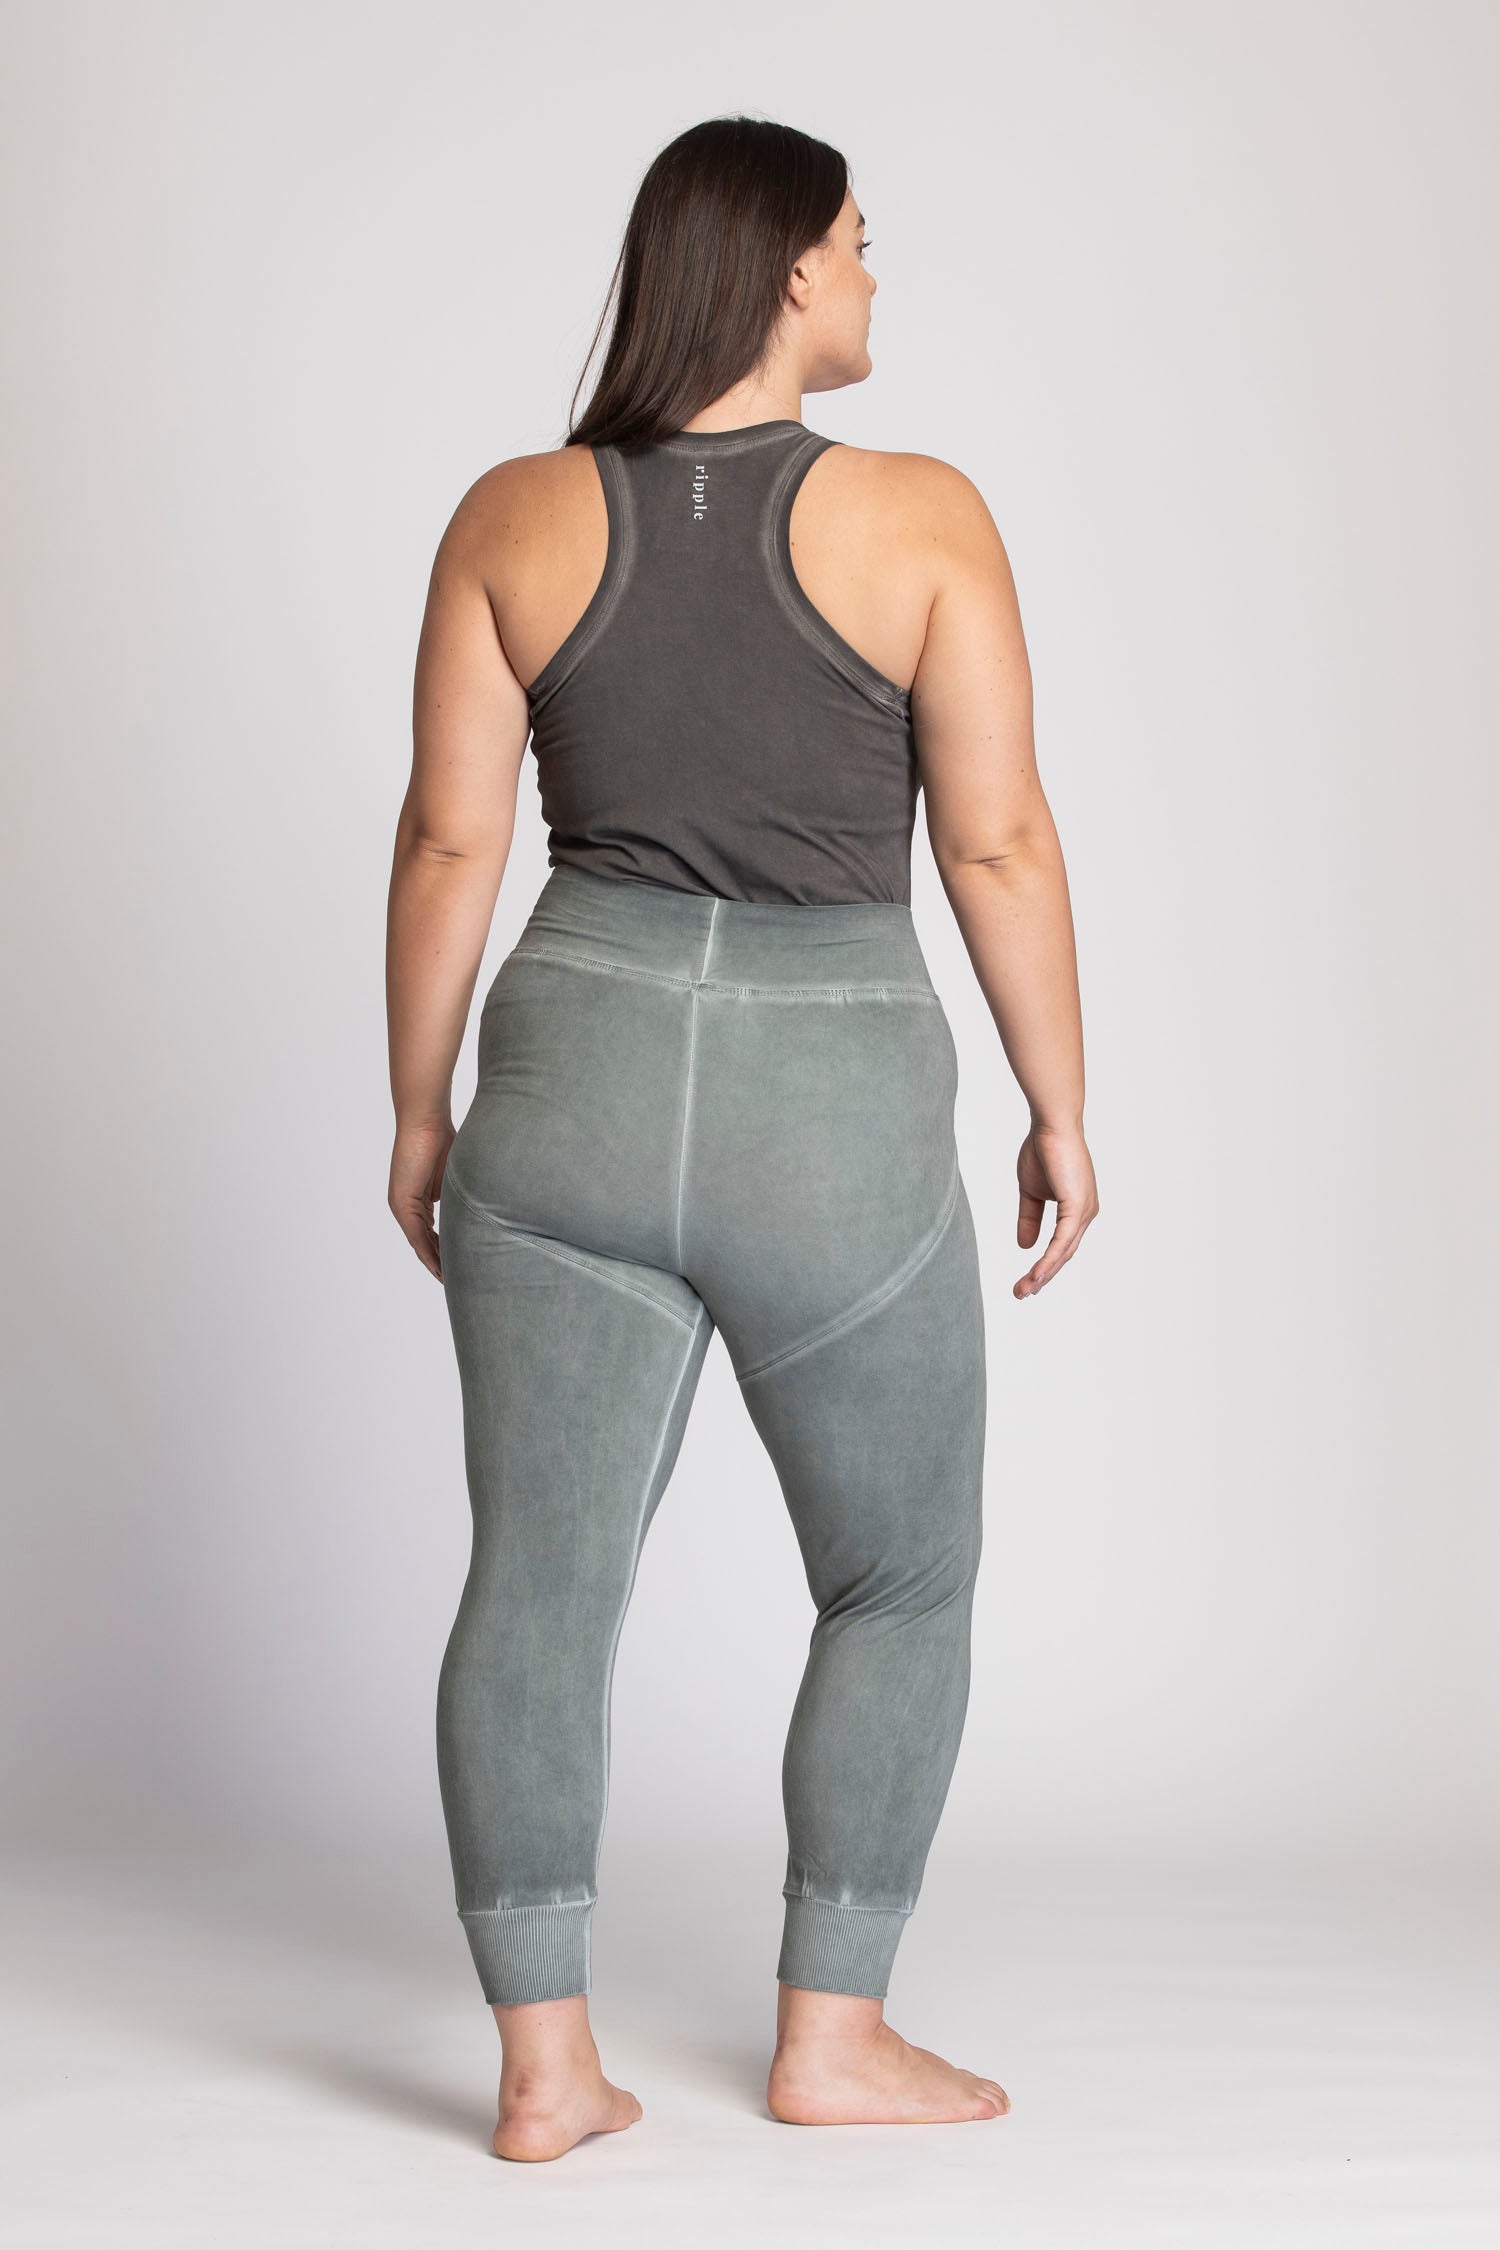 The Kobieta Dual Ruffled Cuff Yoga Pants; XXS Thru Plus Sized 10X+ -  Kobieta Clothing Company